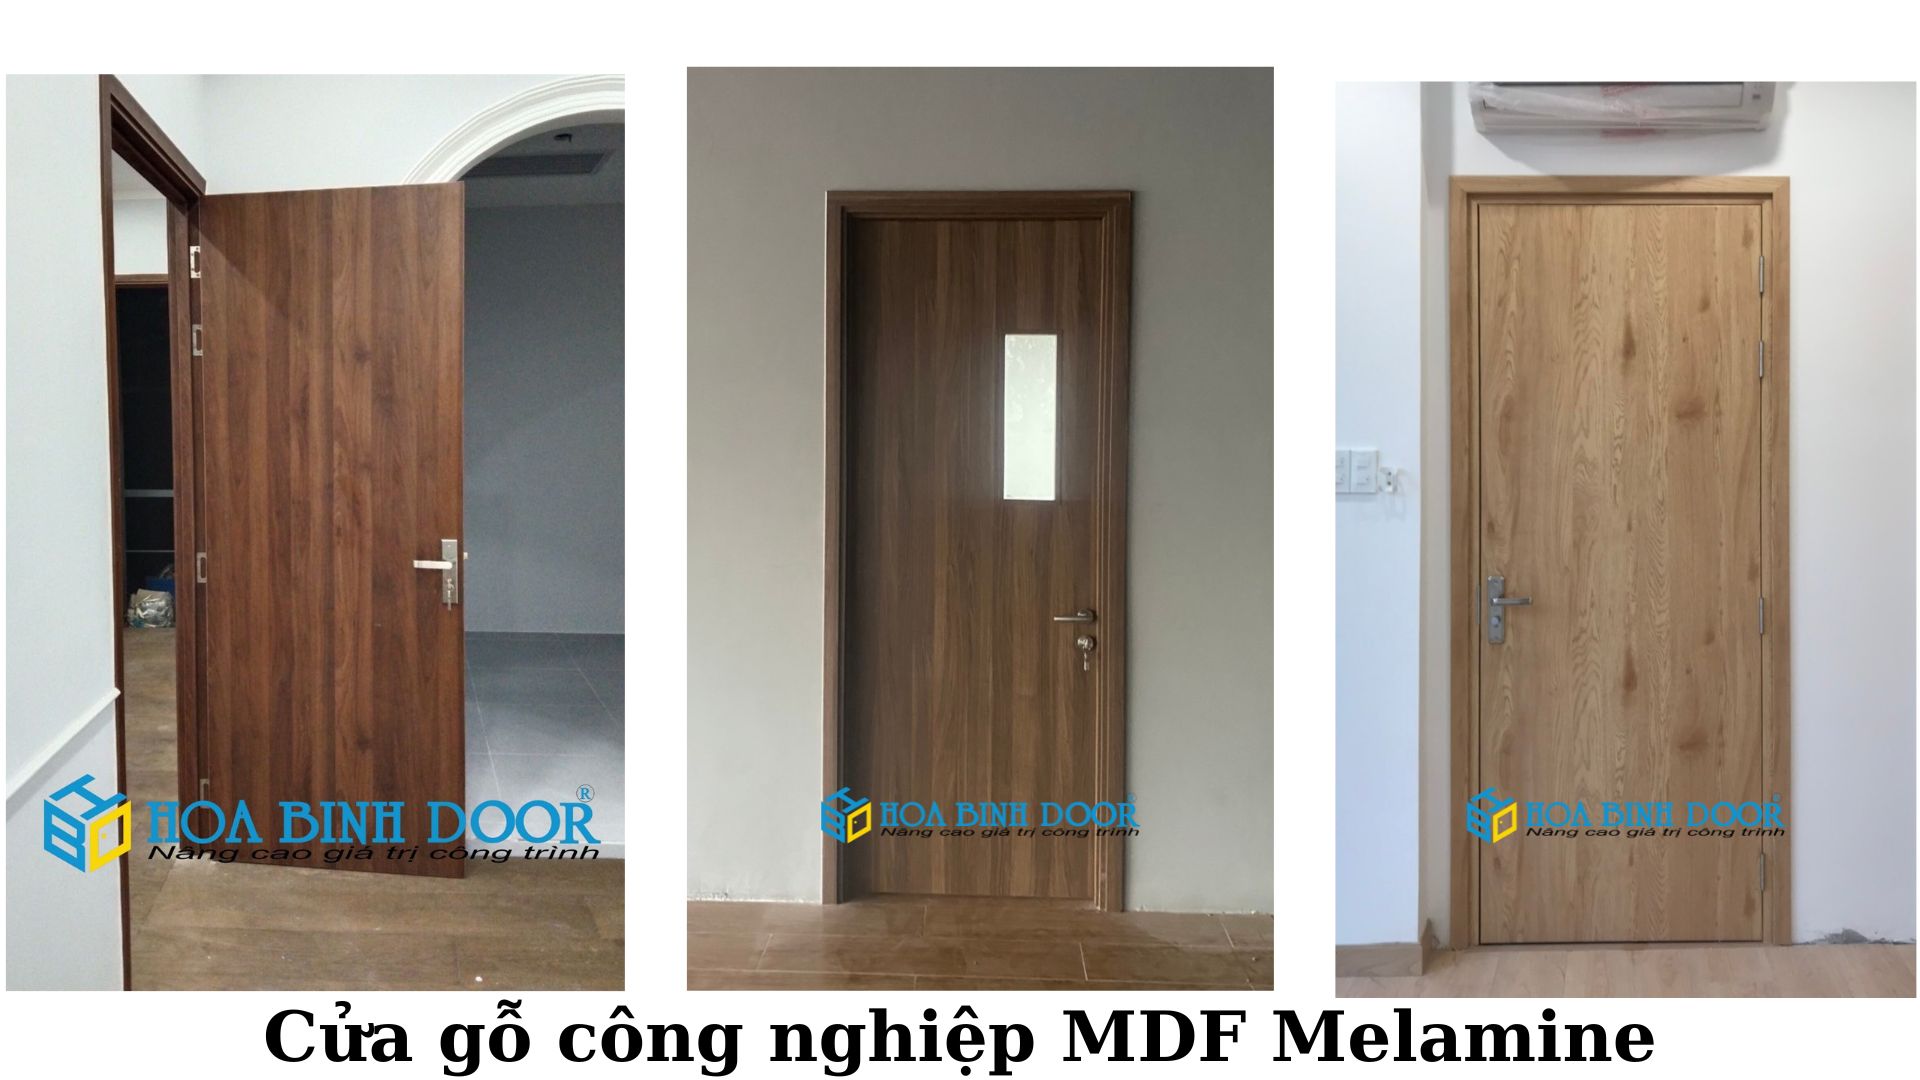 Cua-go-cong-nghiep-MDF-Melamine-2.jpg